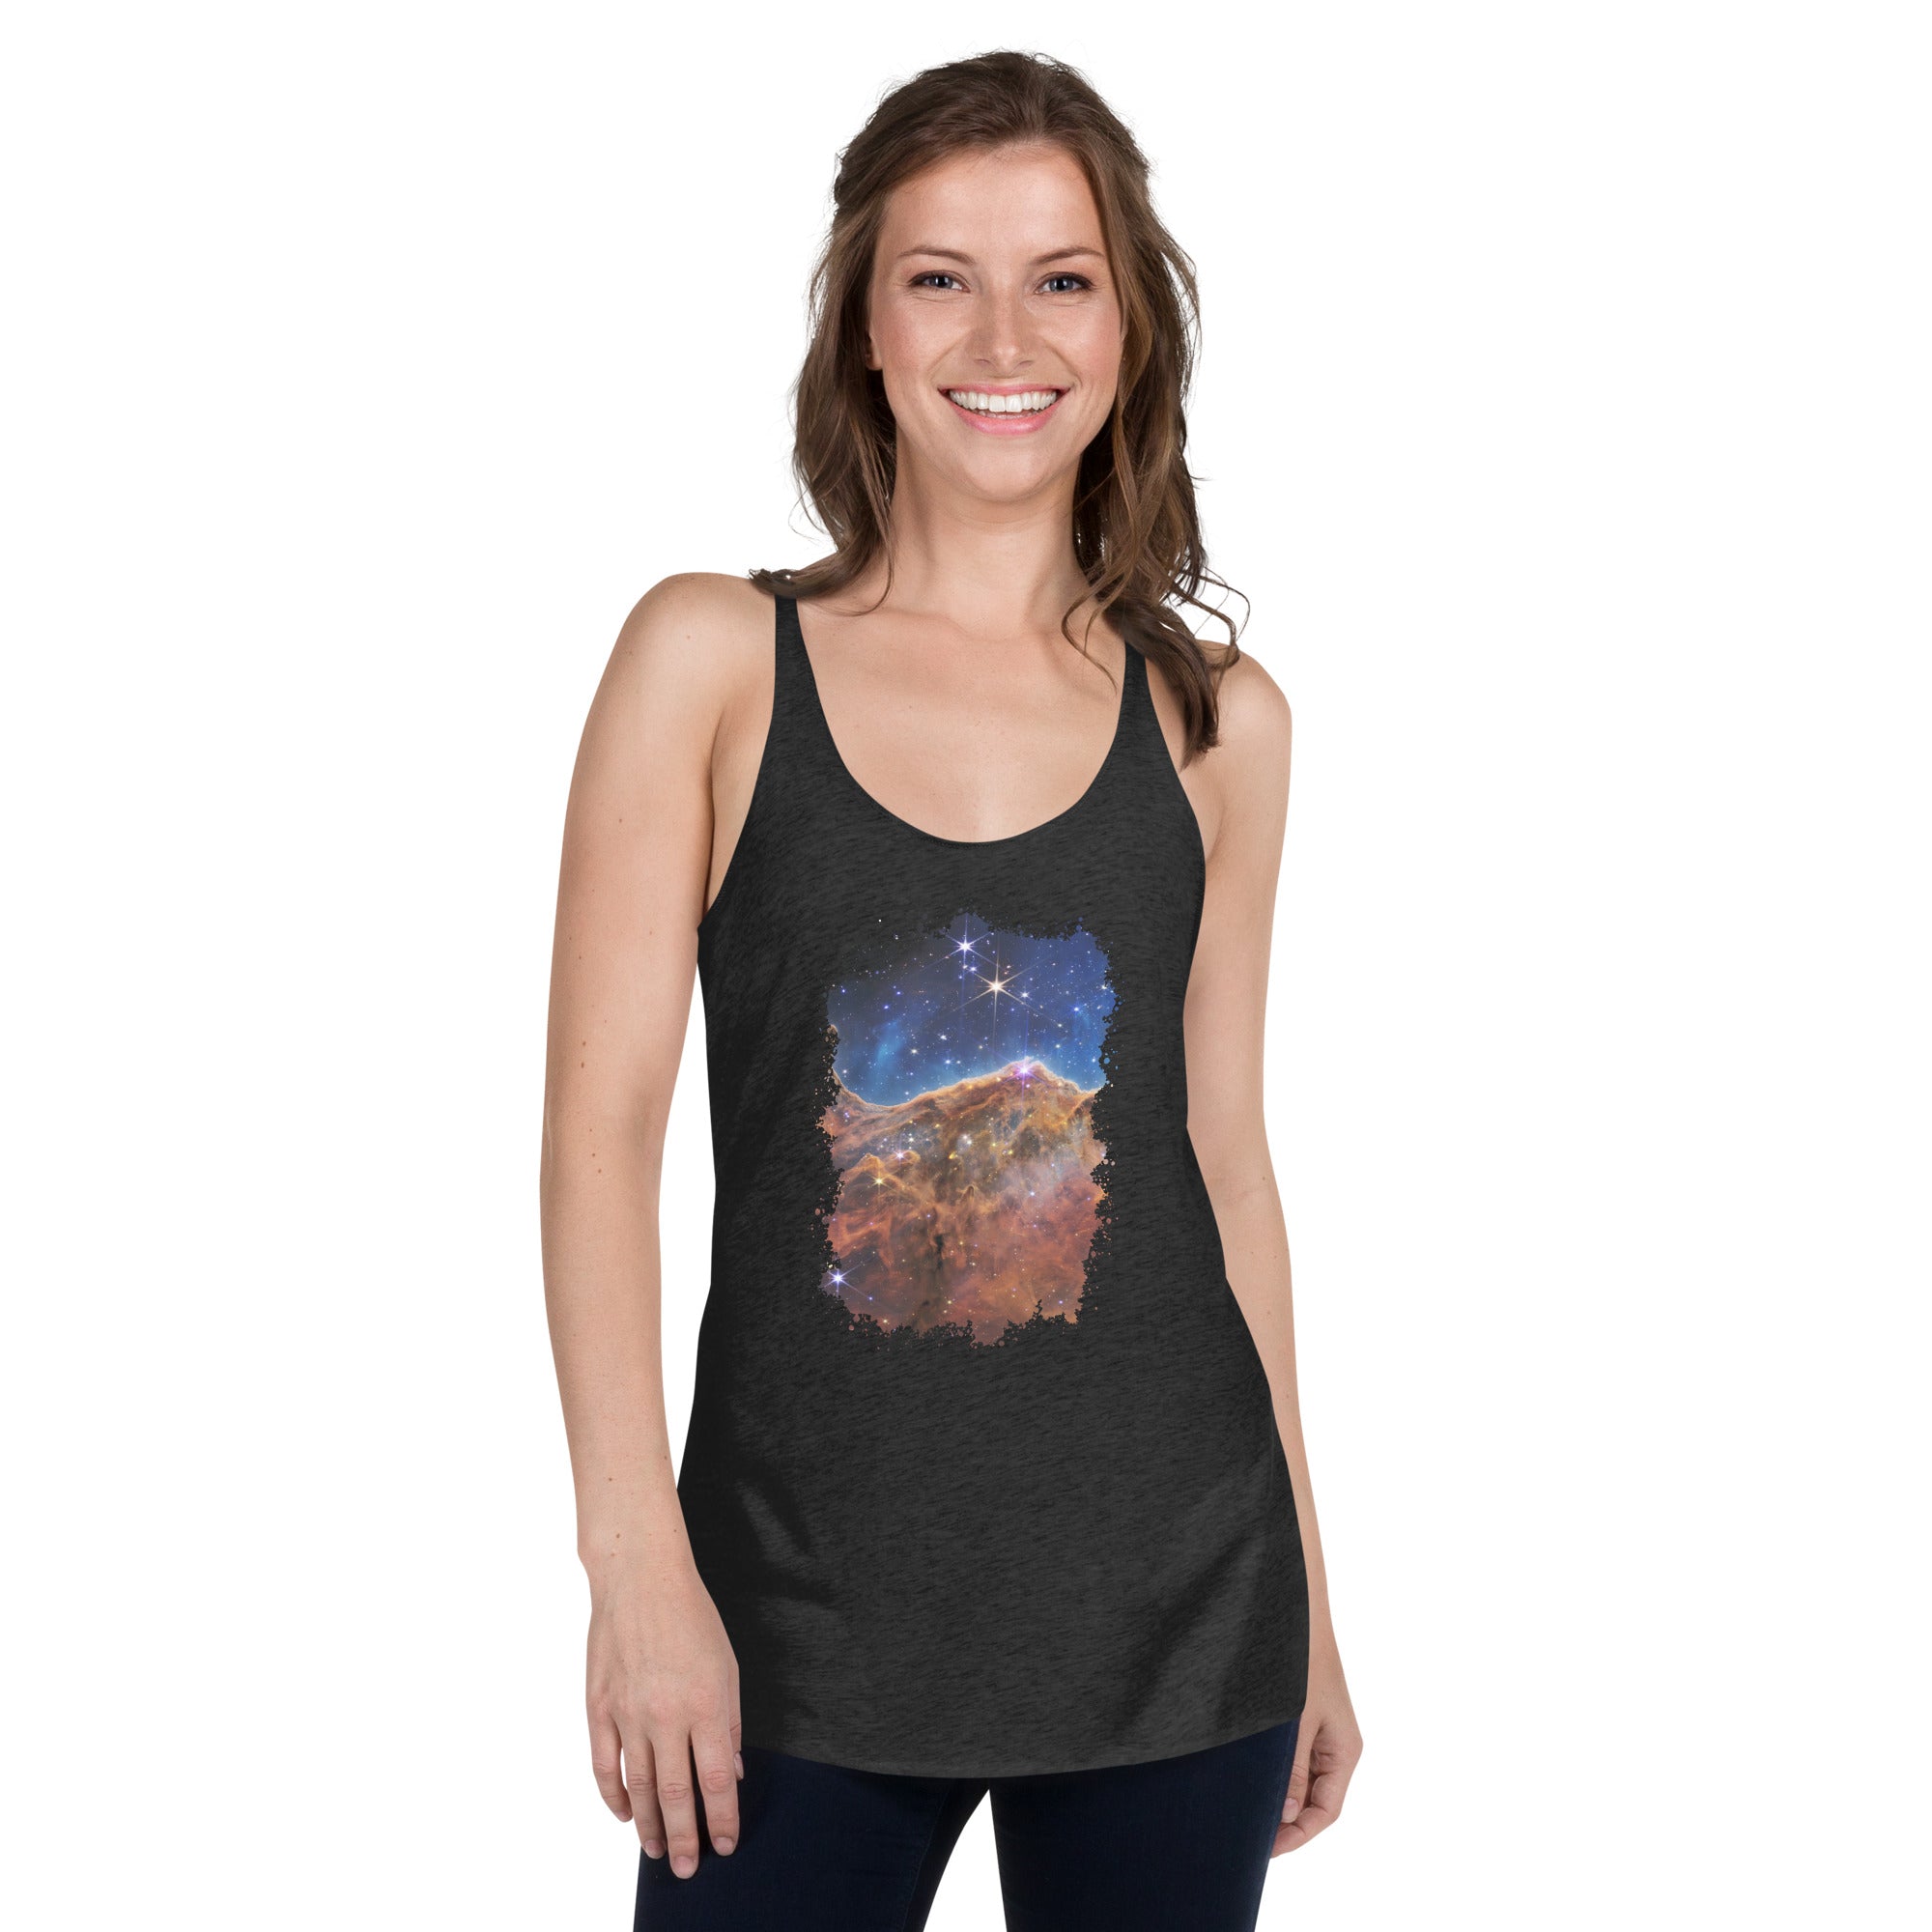 The Carina Nebula Space Graveyard JWST Women's Racerback Tank Top Shirt